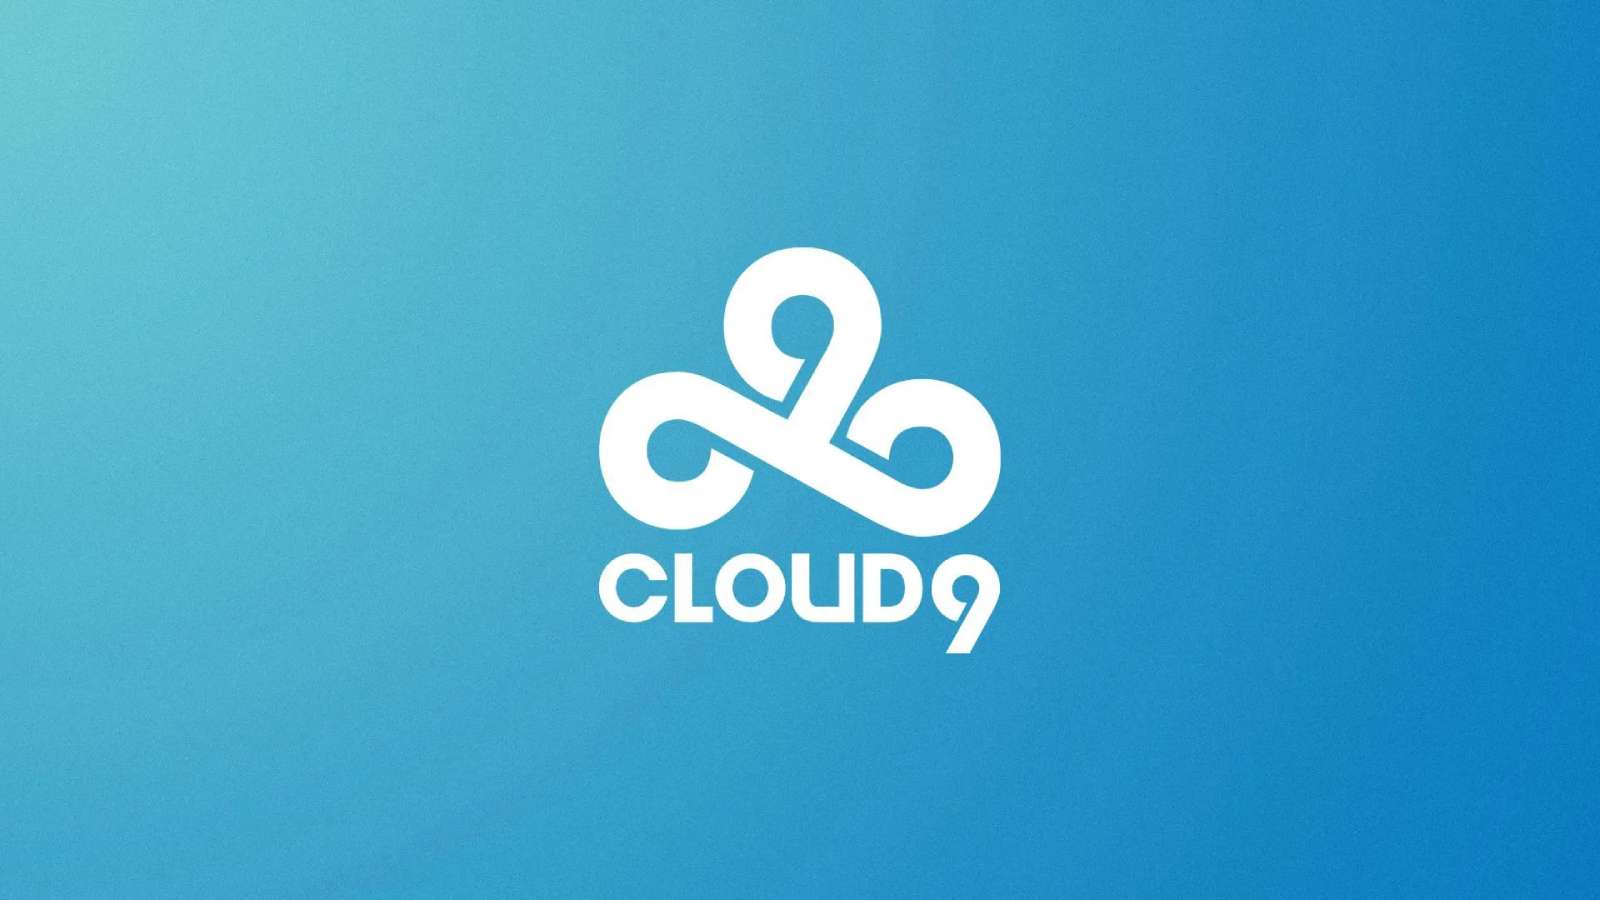 Cloud9 logo splash art